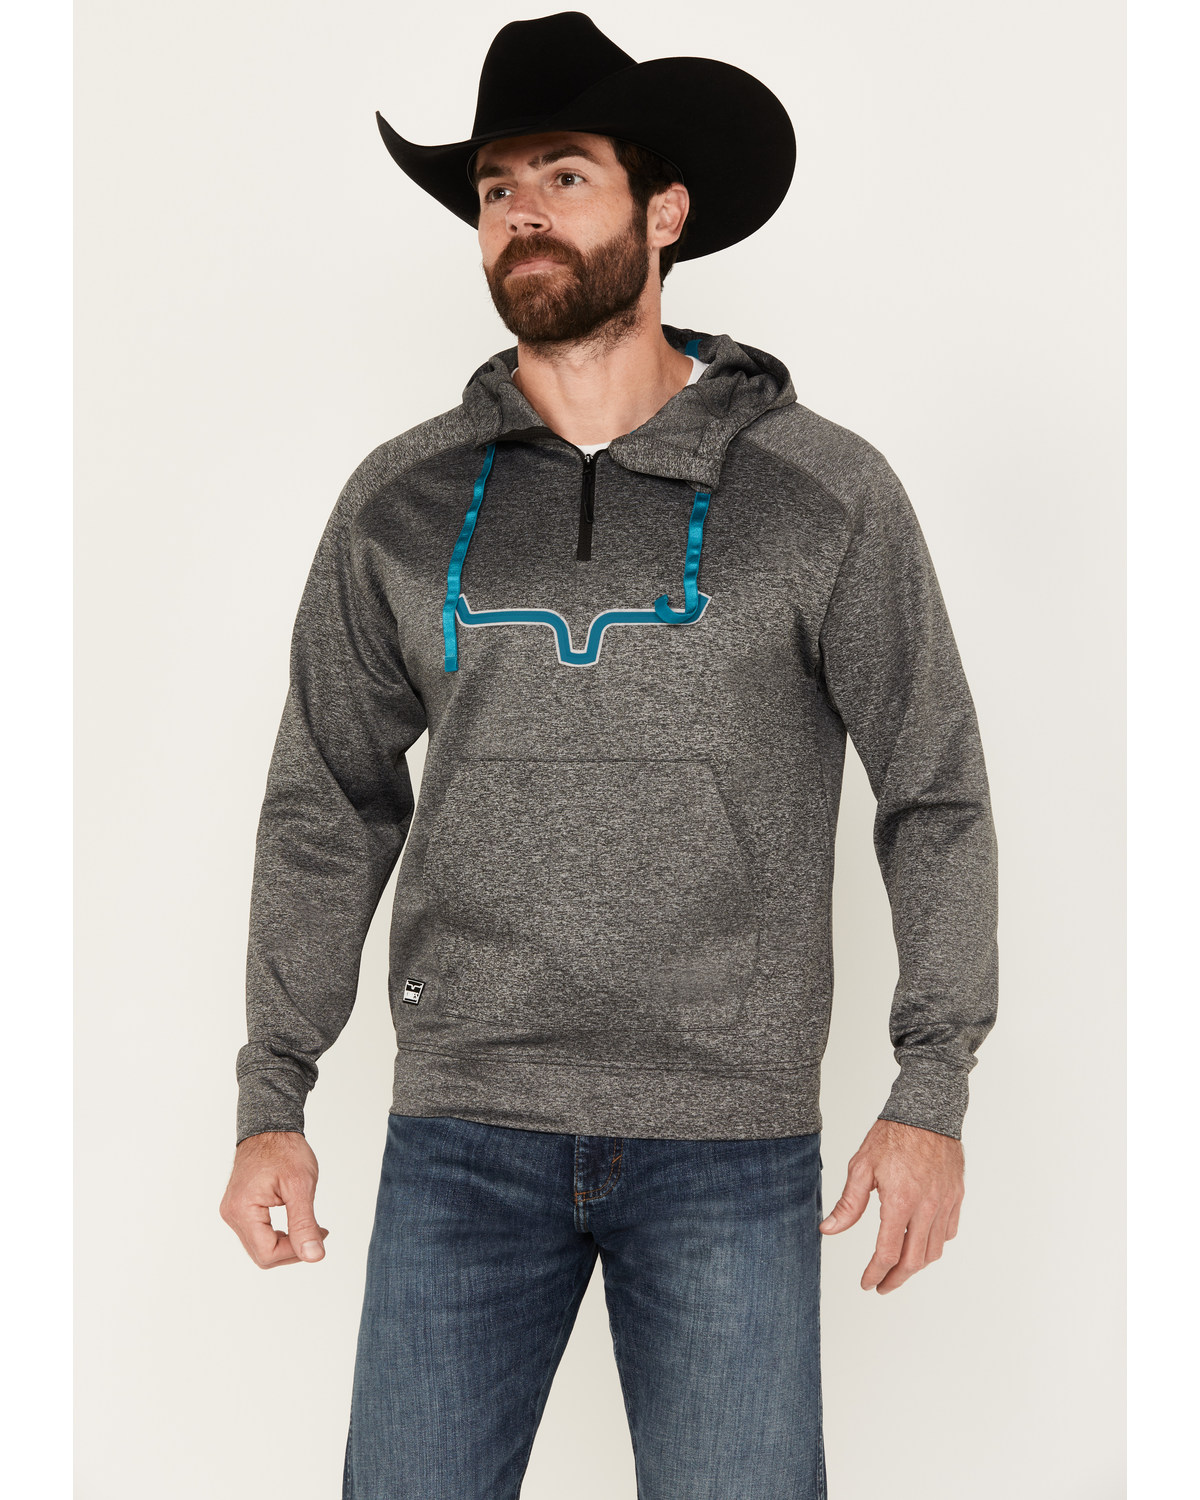 Kimes Ranch Men's Rockford Tech Hooded Sweatshirt